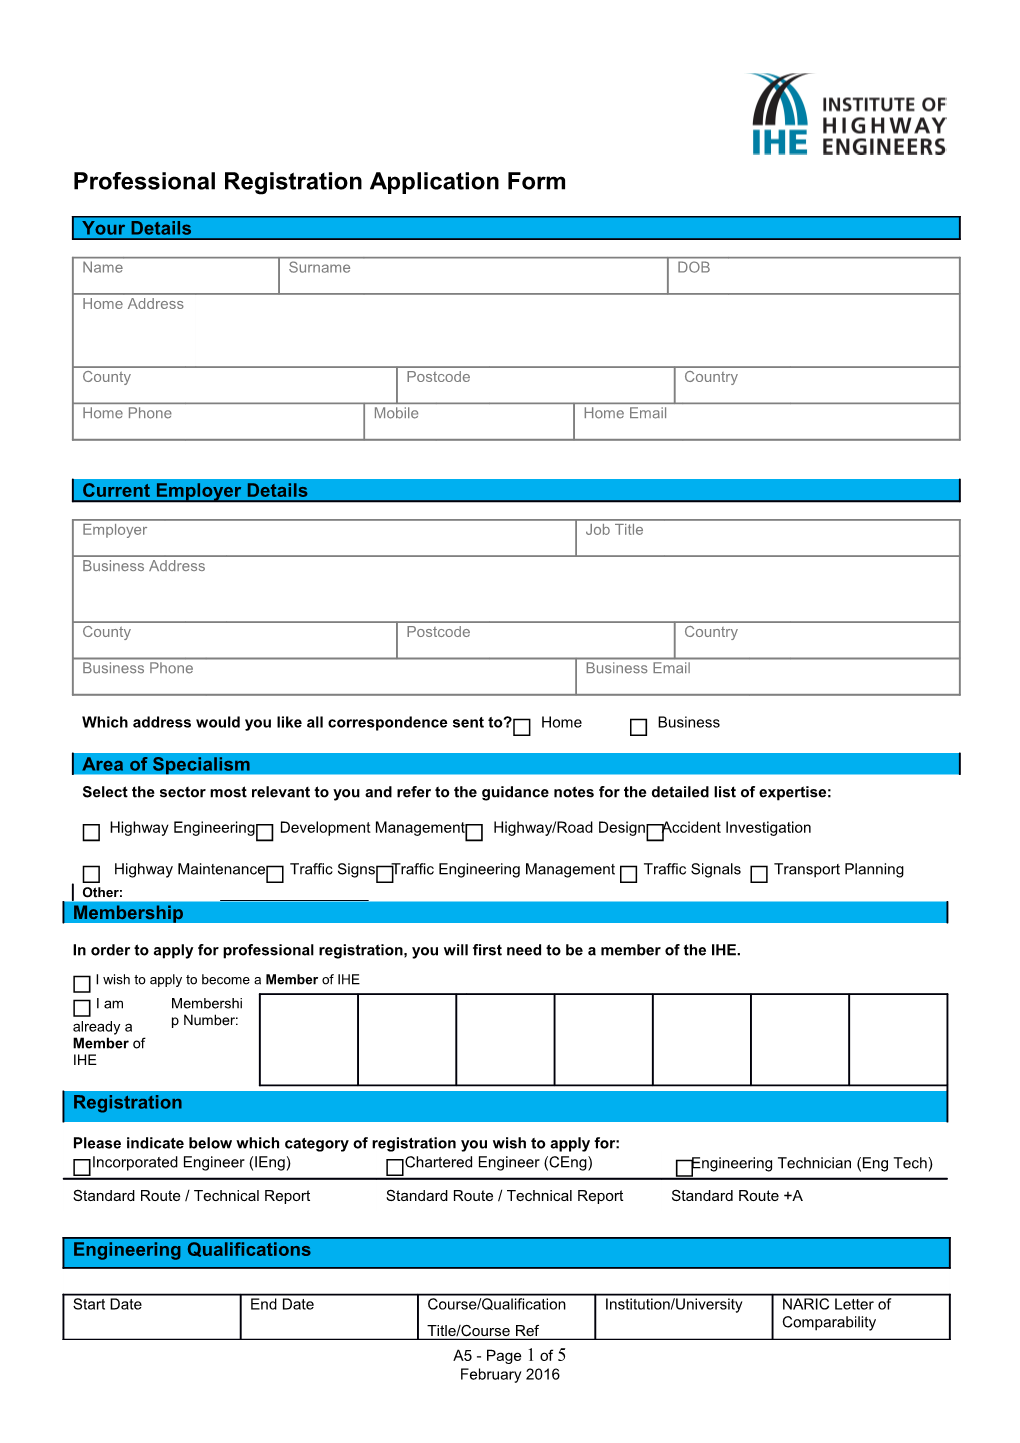 Ceng/Ieng Professional Registration Application Form